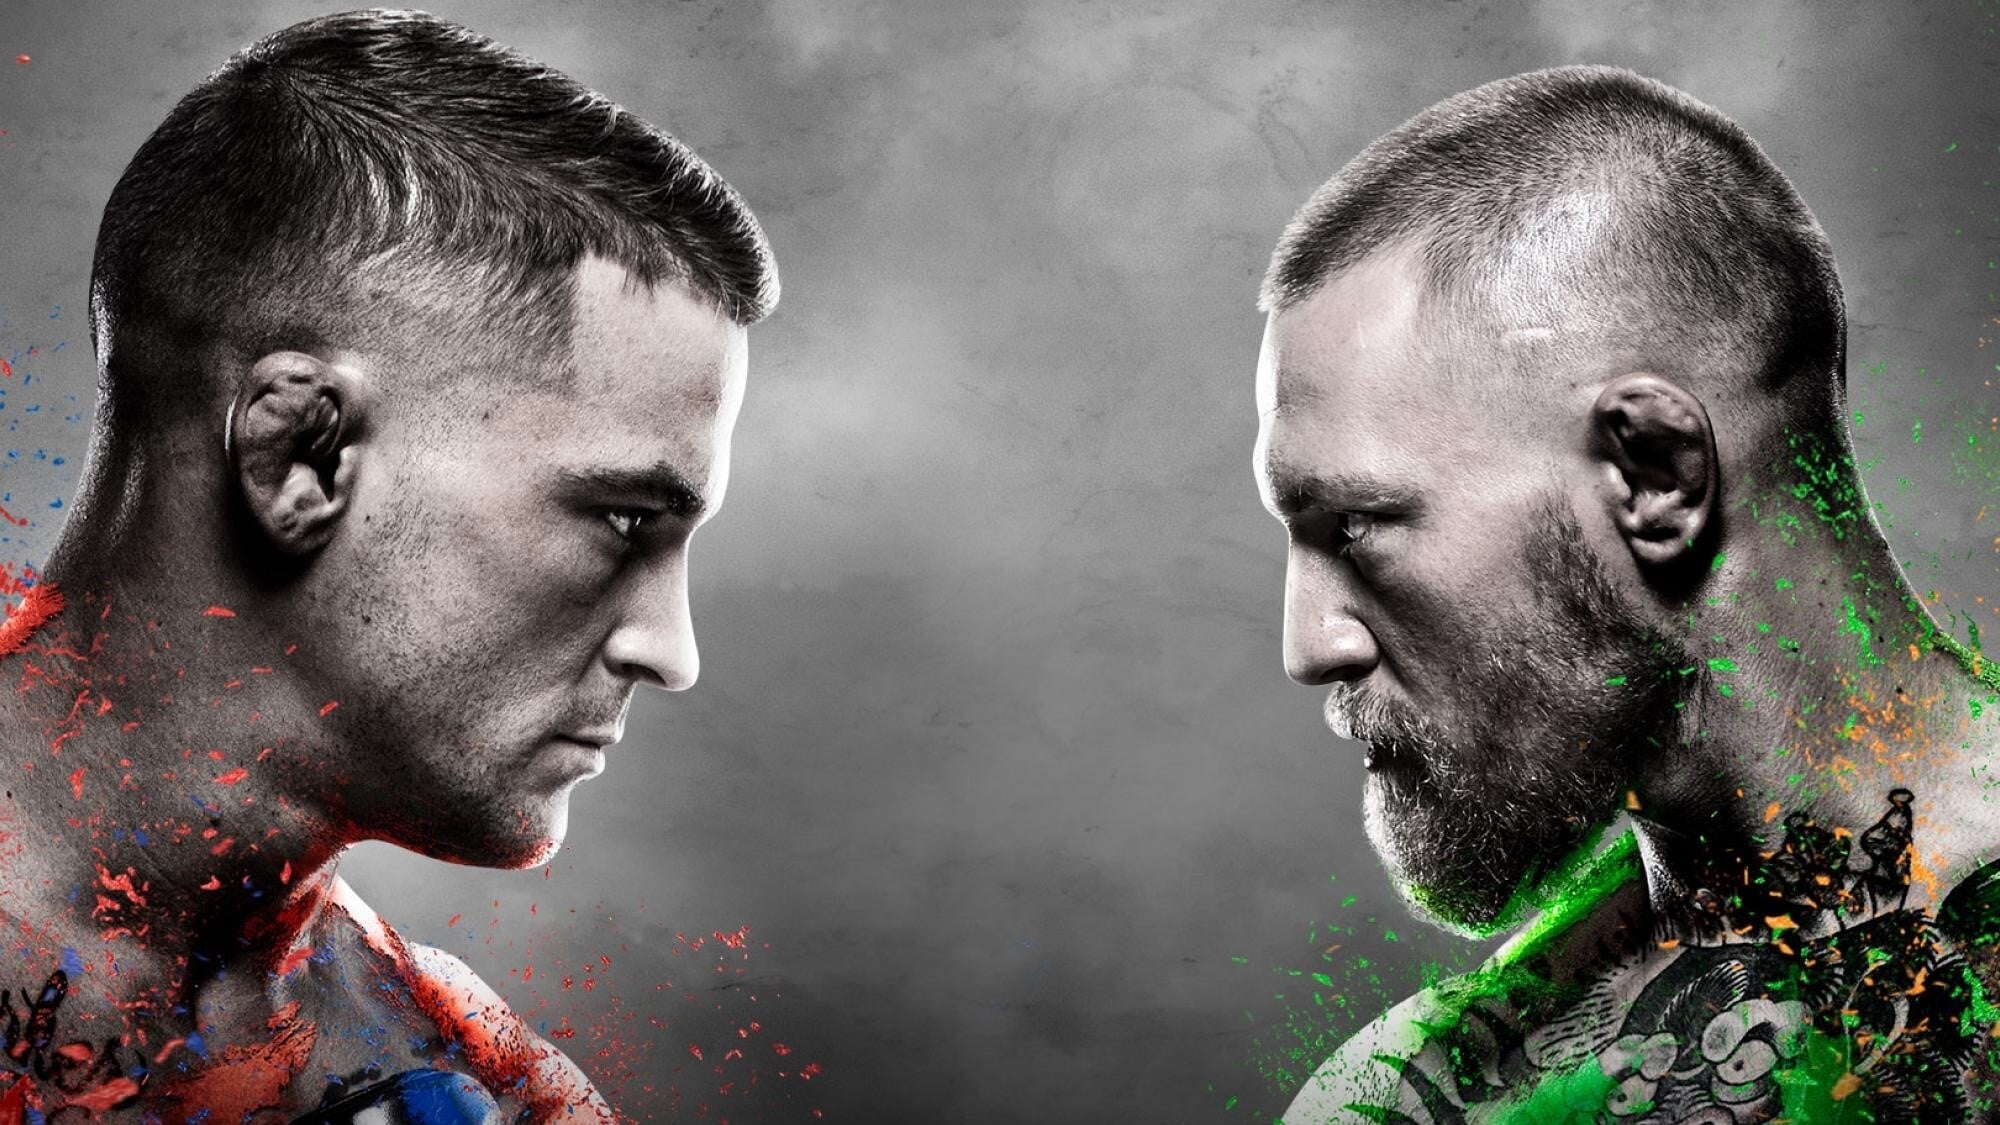 UFC 257: Poirier vs. McGregor 2 (2021)